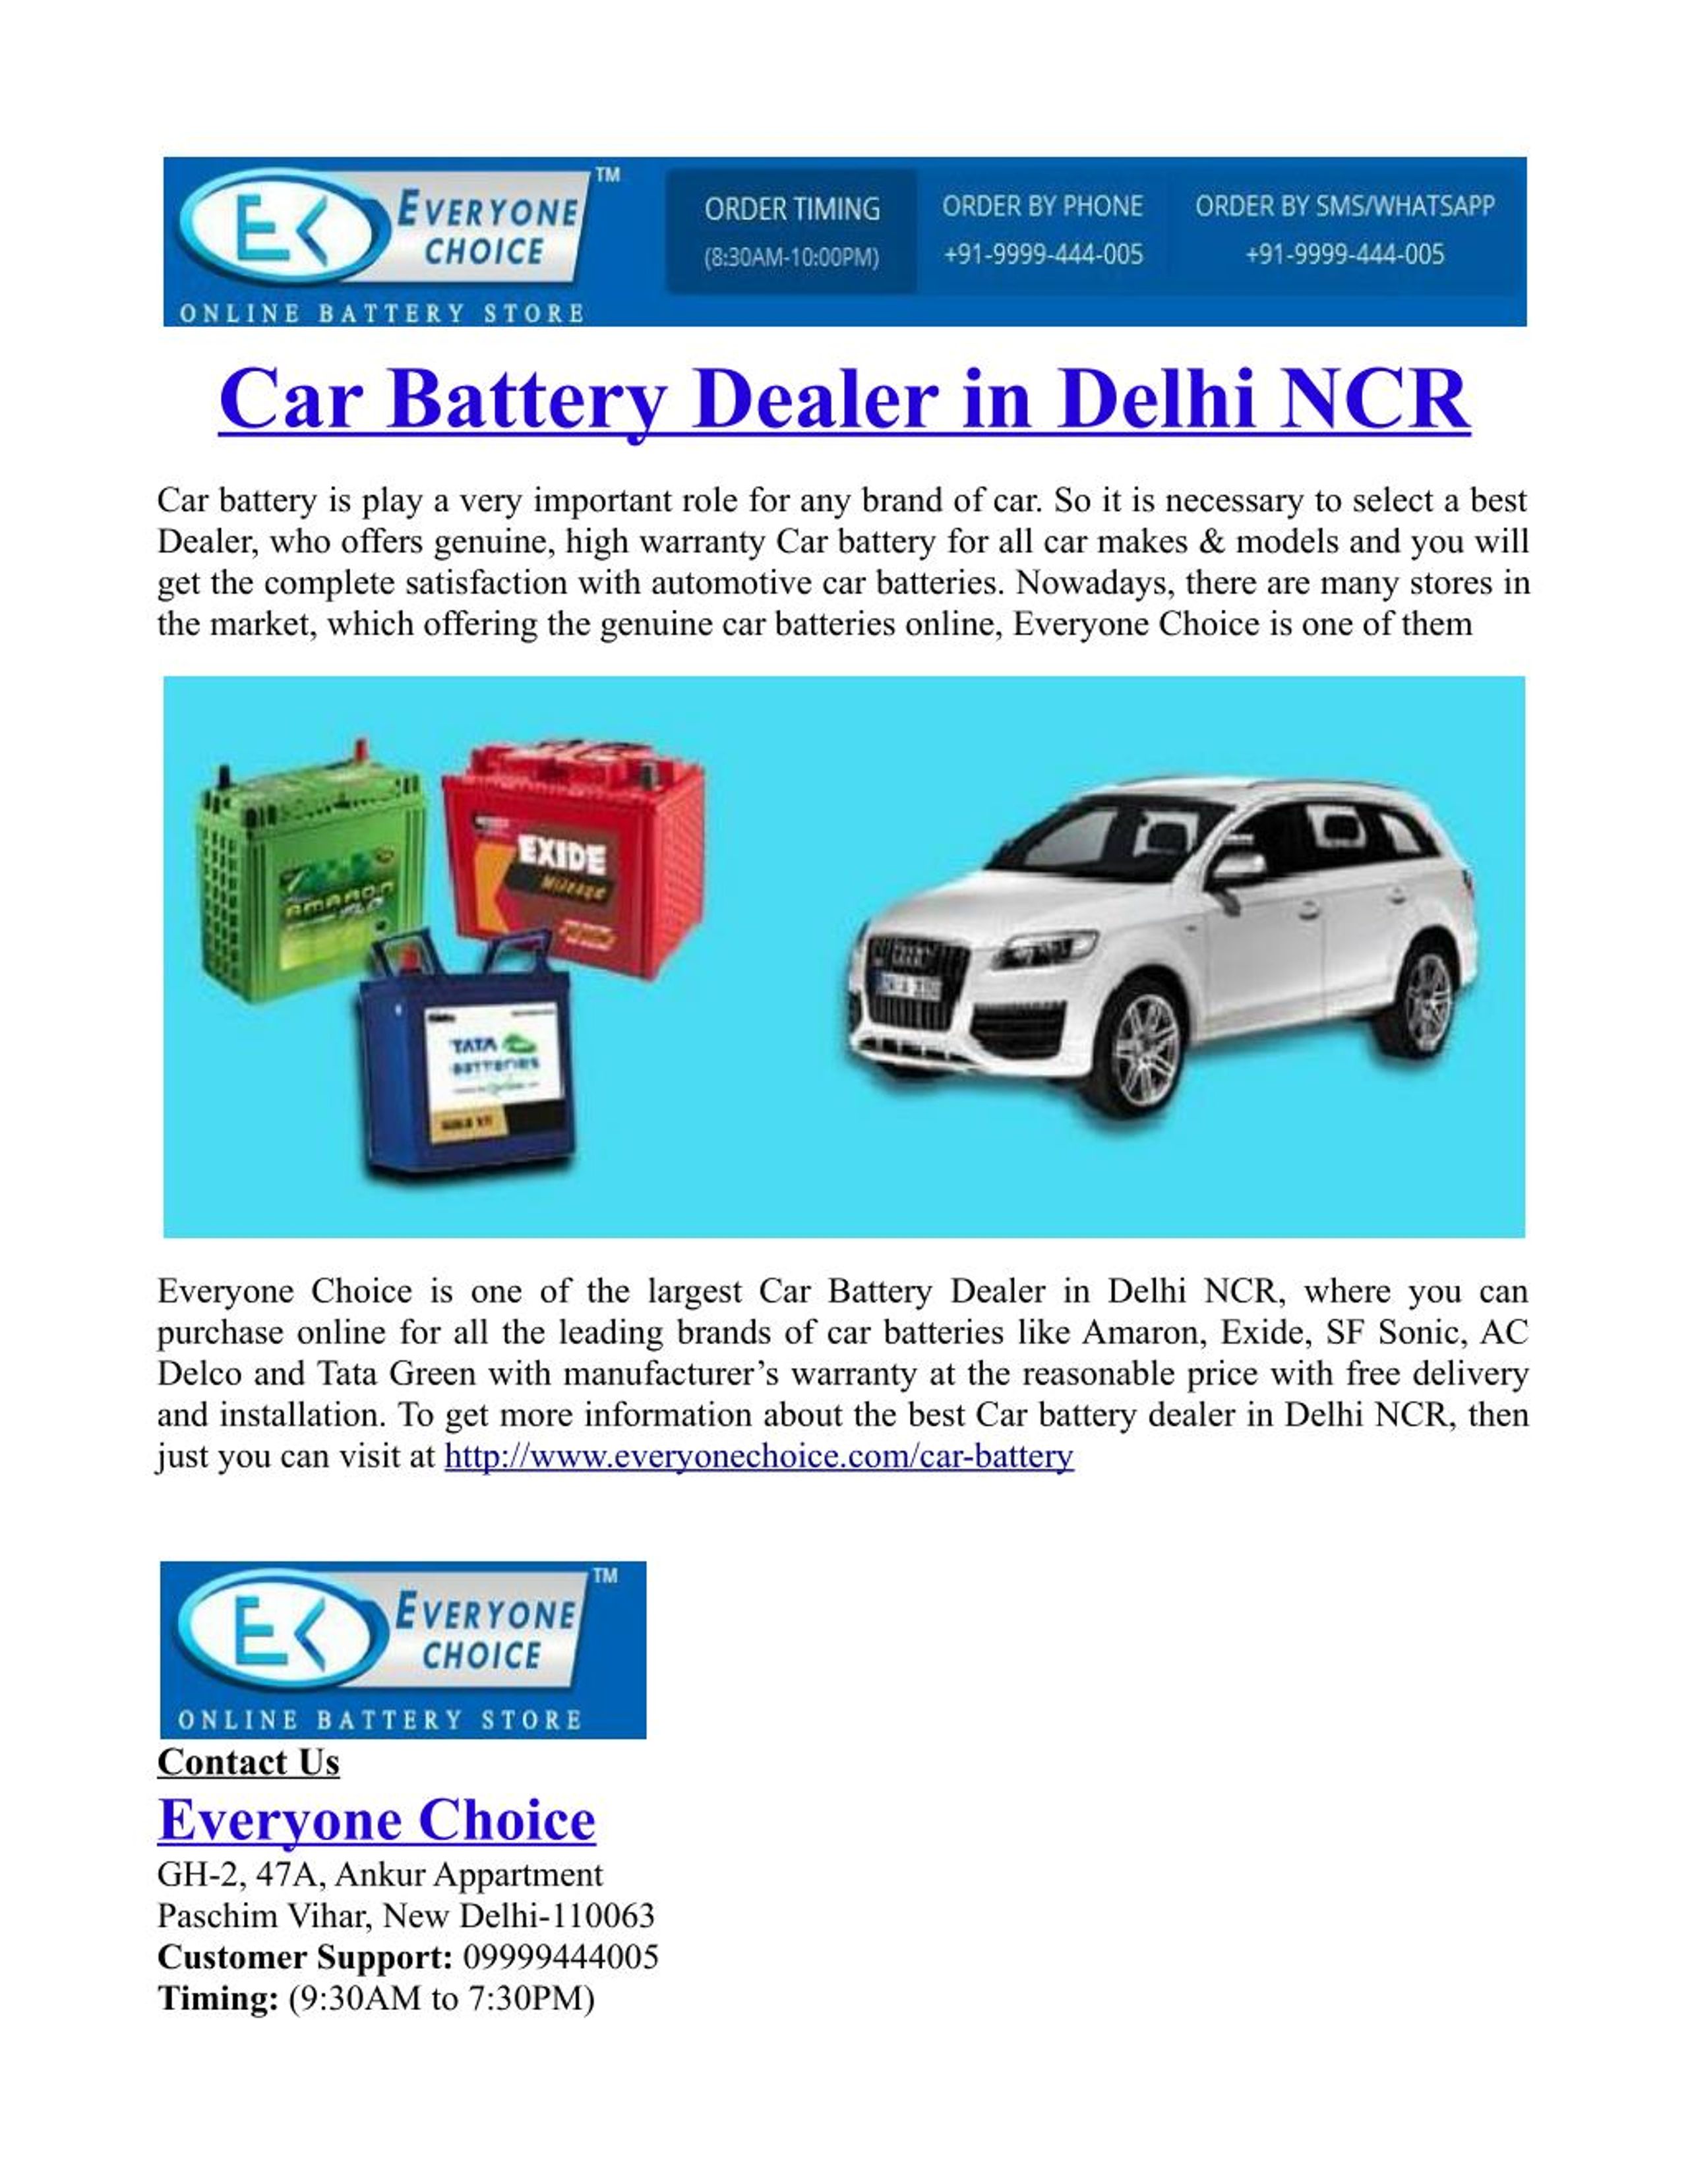 PPT Car Battery Dealer in Delhi NCR PowerPoint Presentation, free